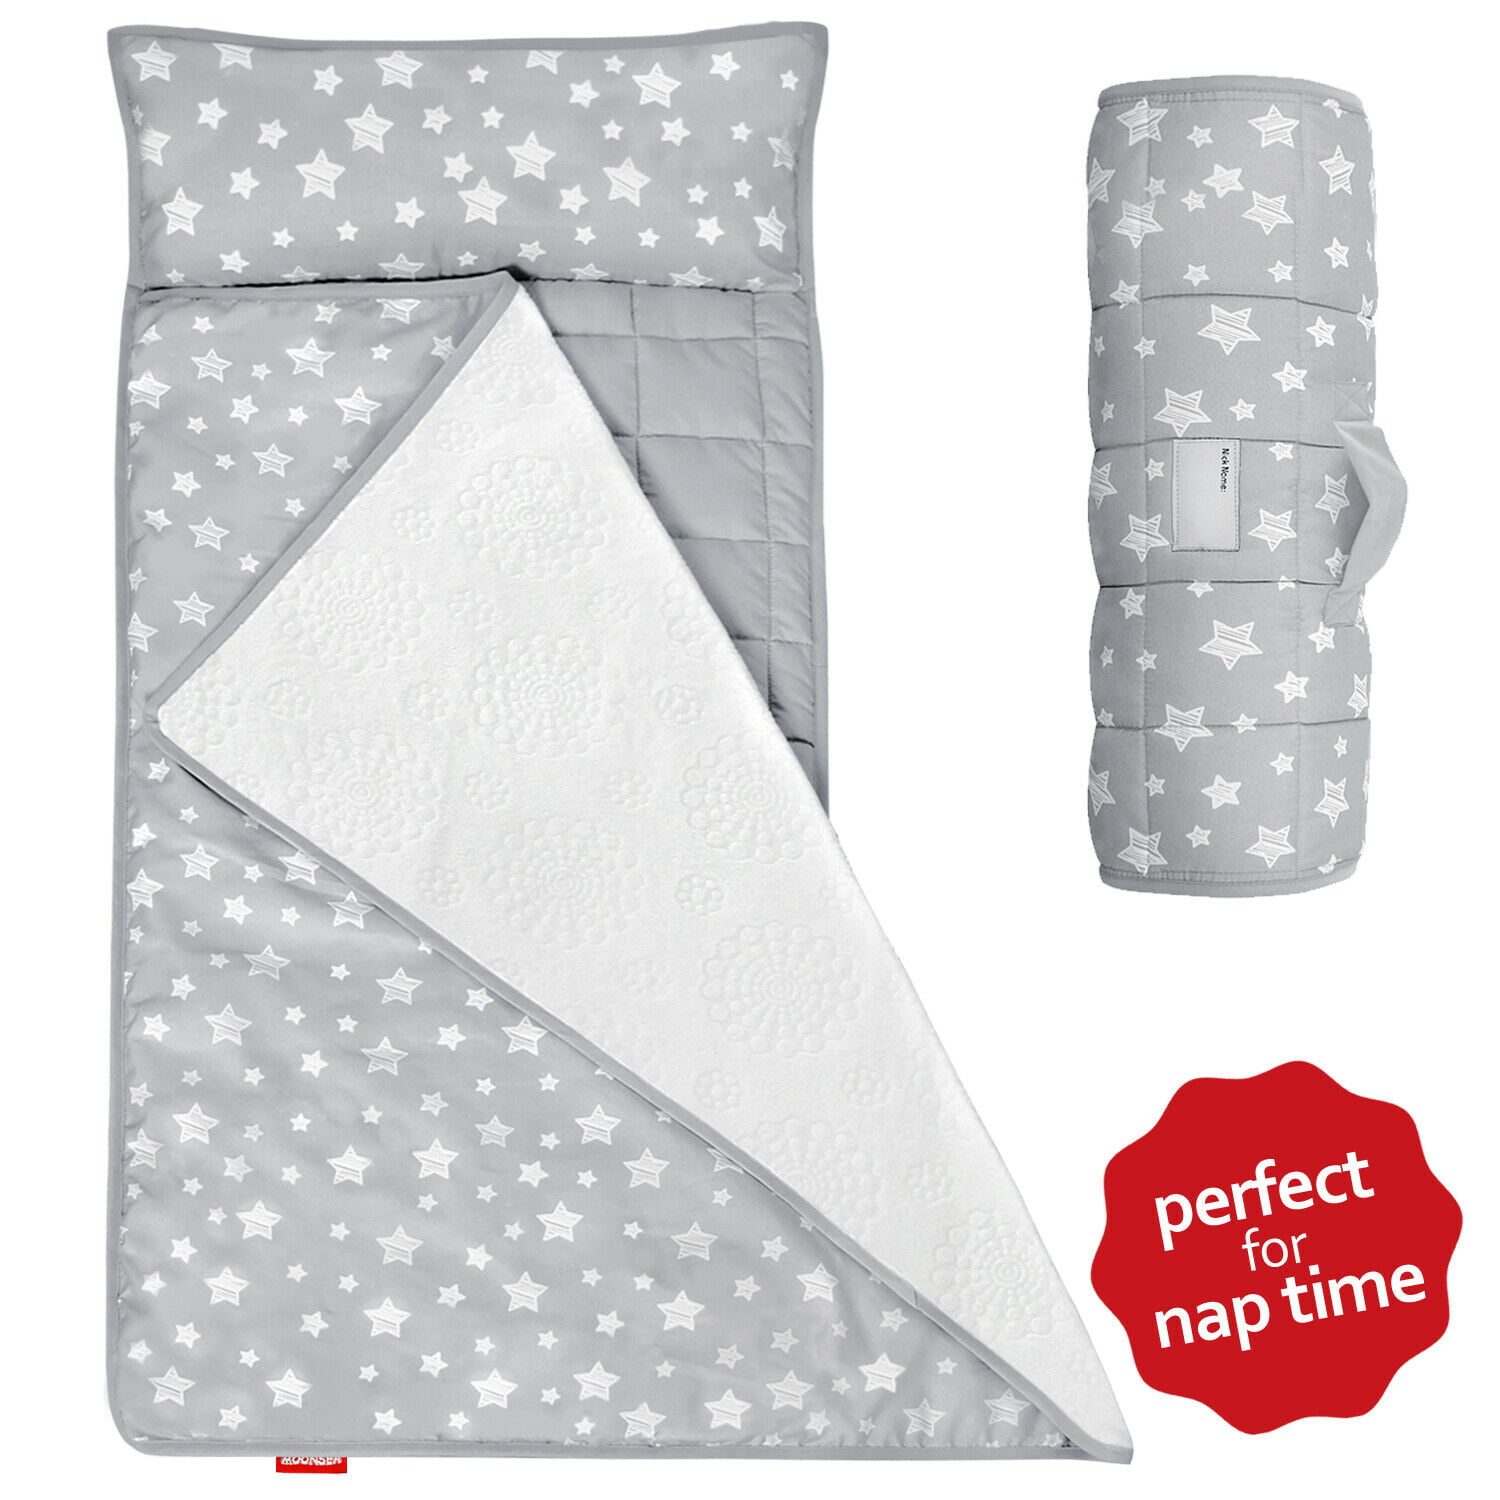 NAP MAT Toddler Daycare Preschool BLANKET PILLOW Bed Set New 